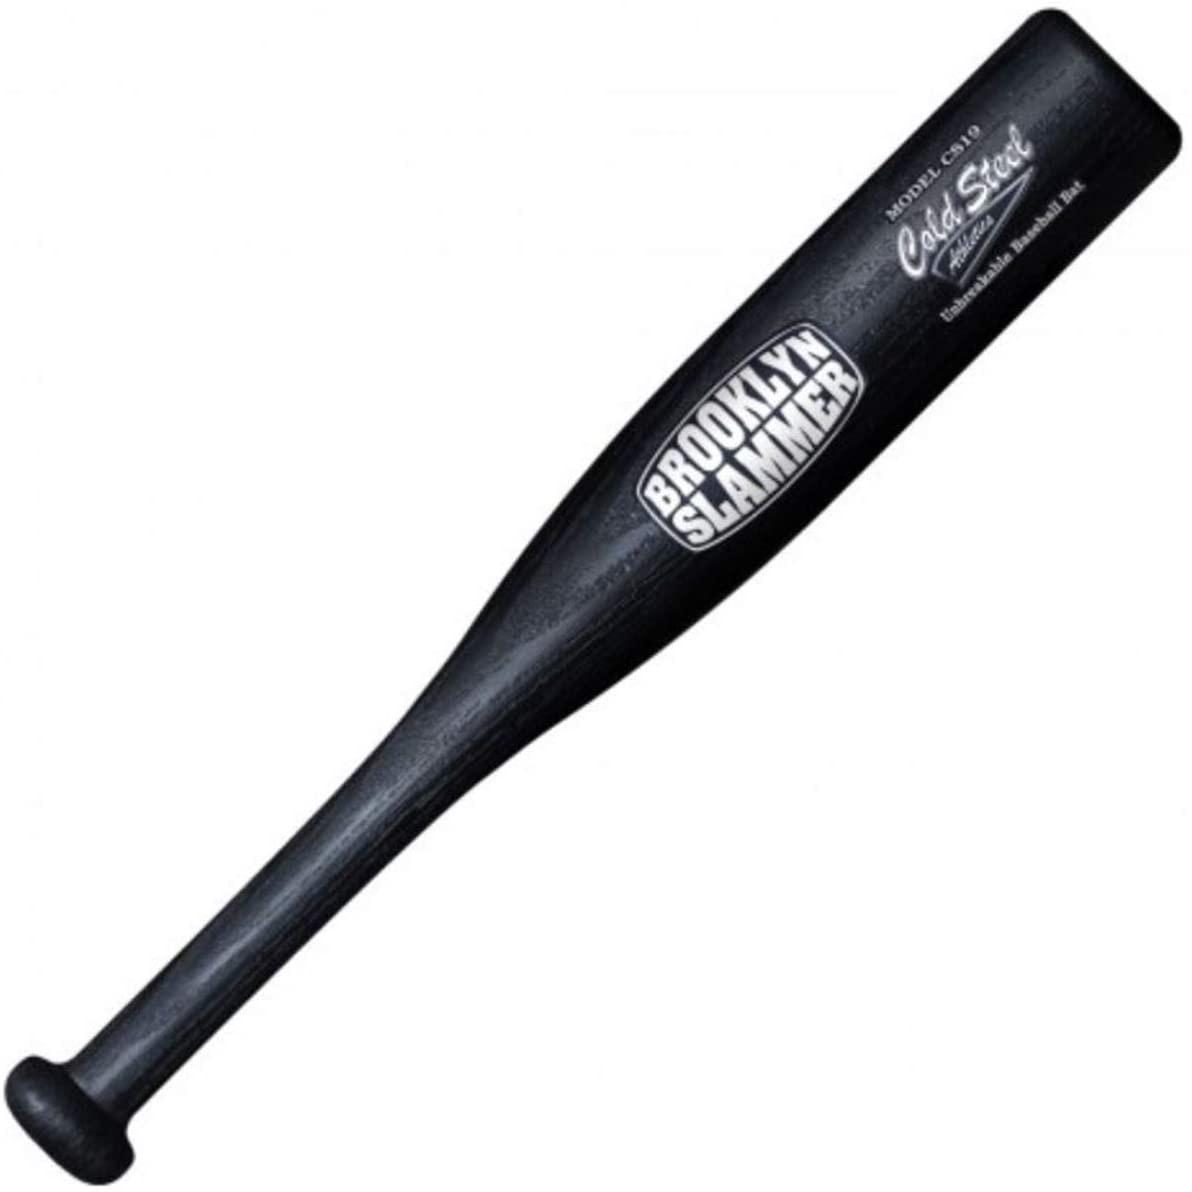 19in Cold Steel Defense Brooklyn Slammer Baseball Bat for $19.73